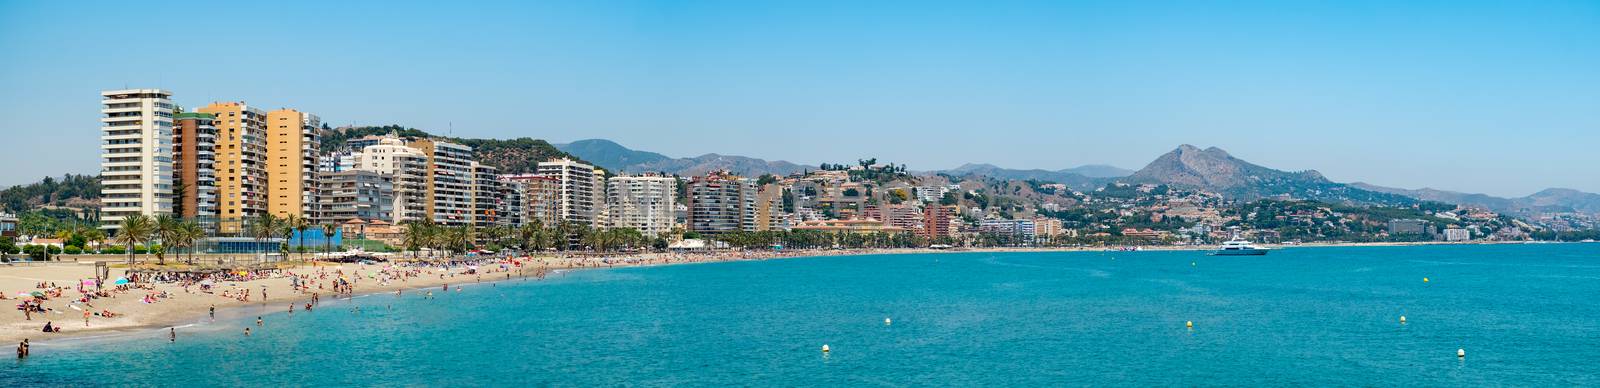 Panoramic view over the Malagueta beach by Roberto